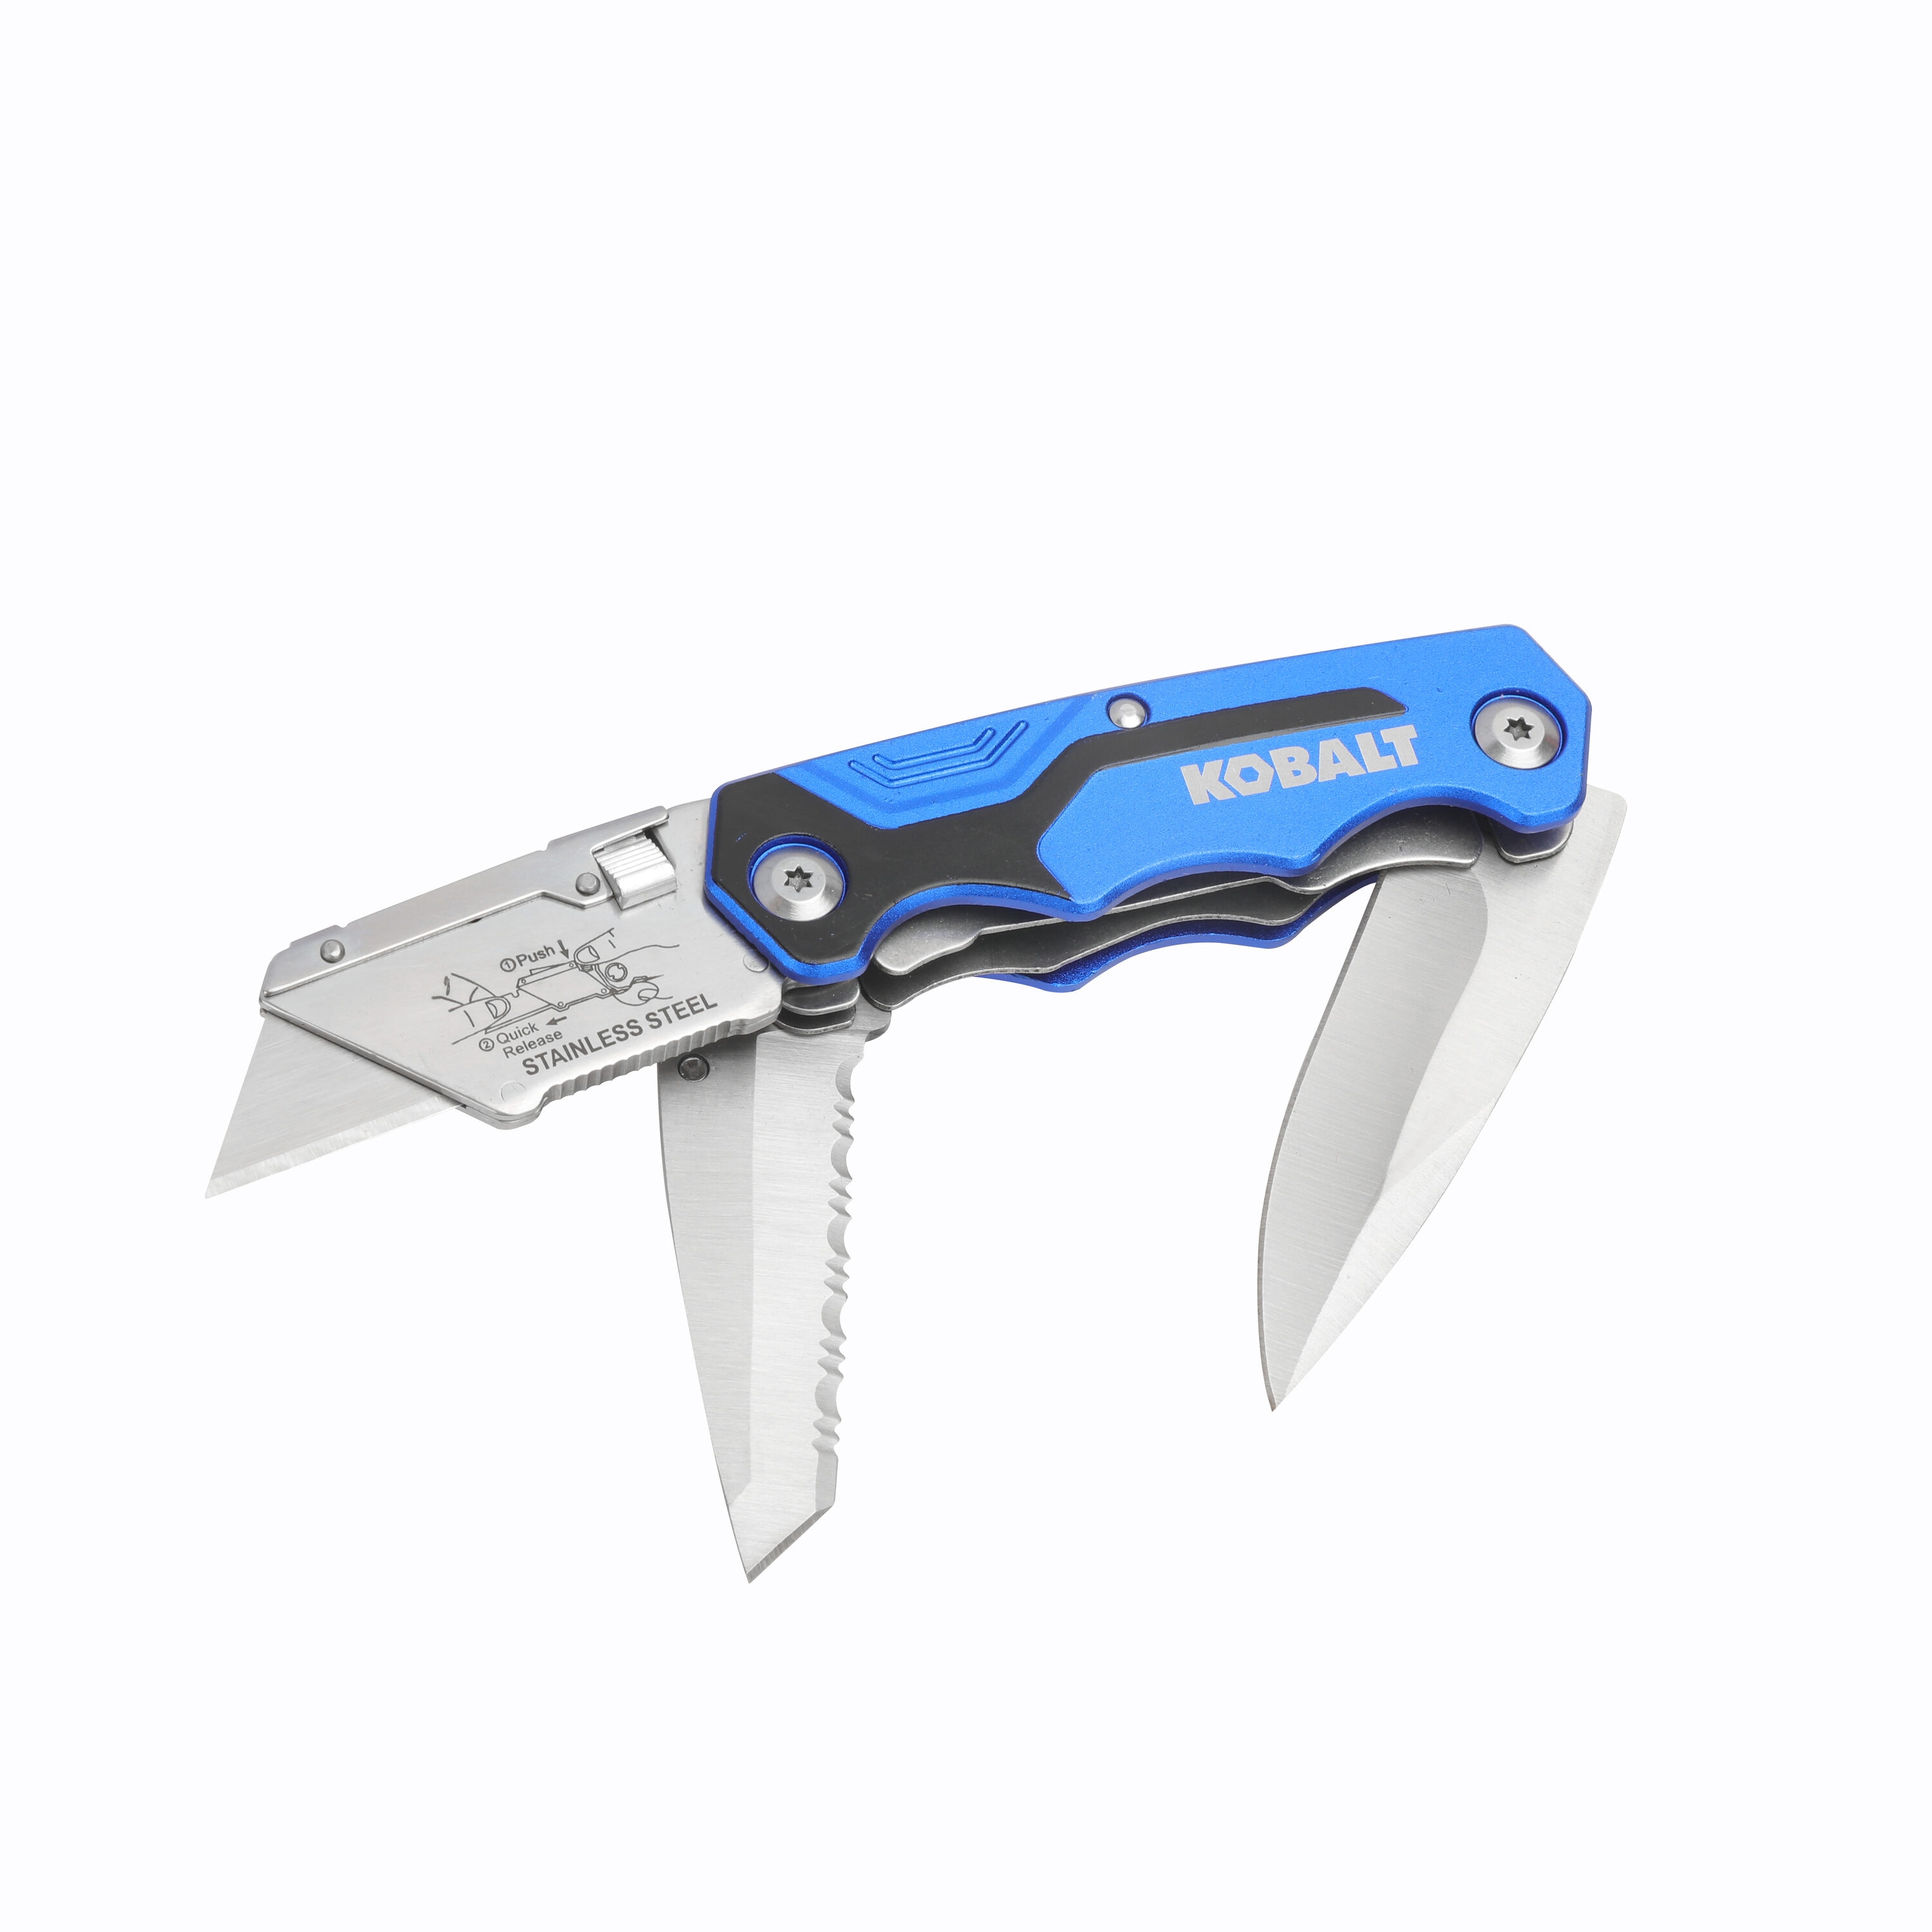 4.75 Razor Sharp Pocket Knife Small Easy to Carry Multi-Use Multi